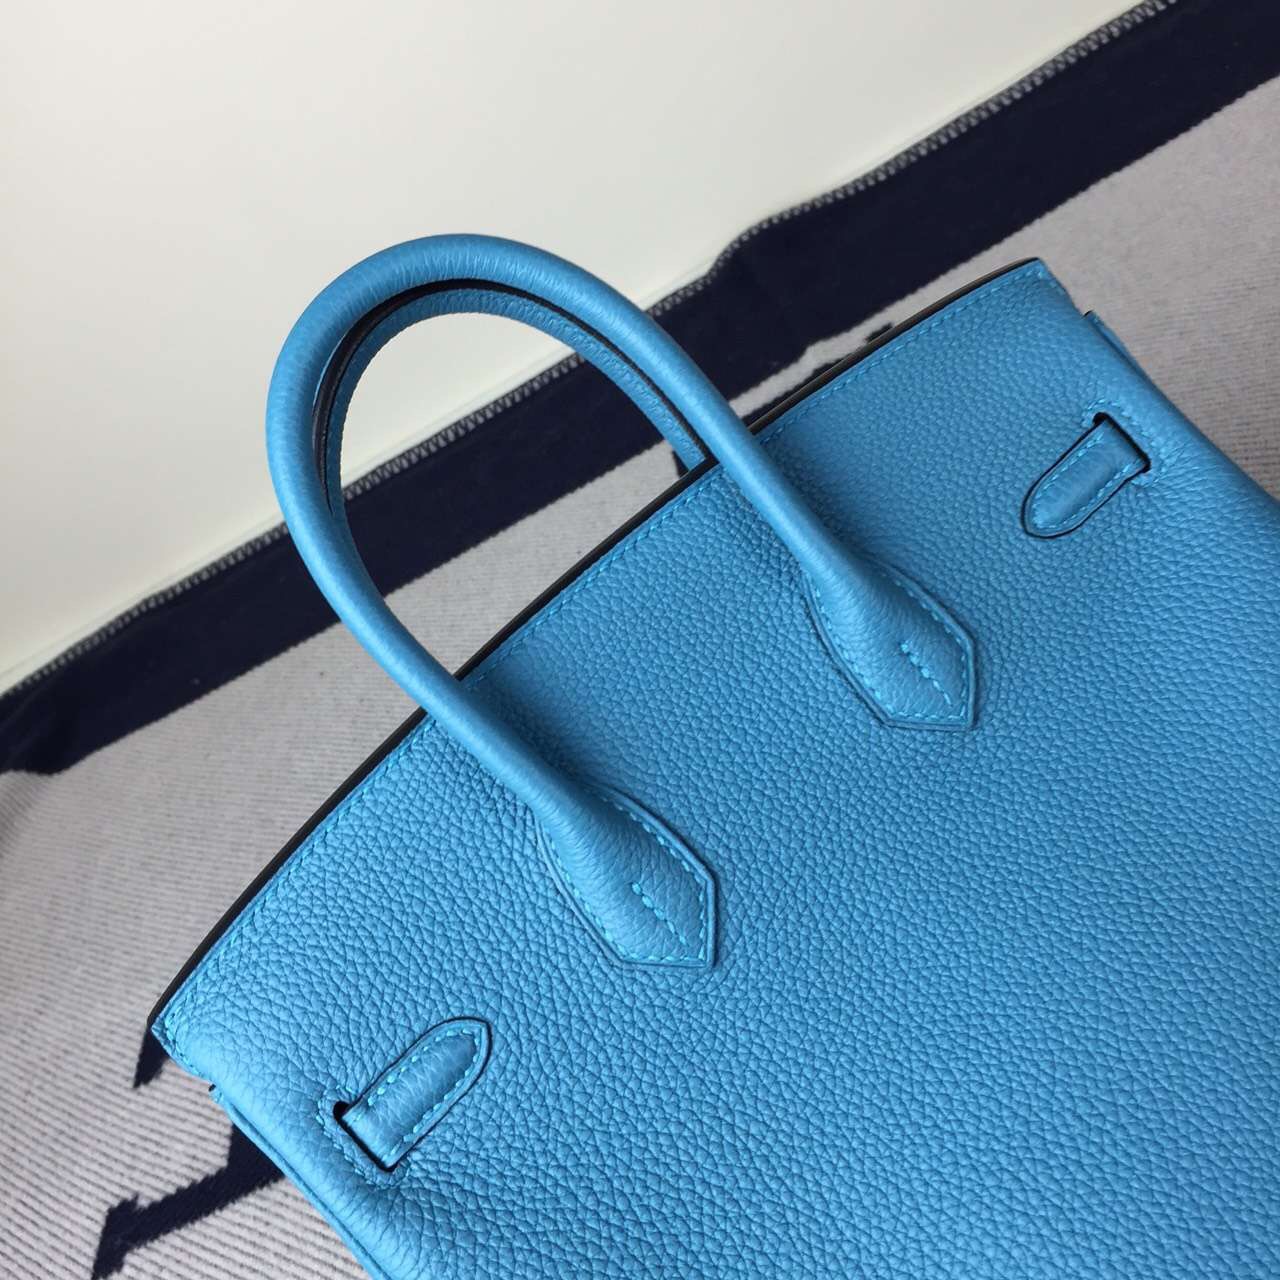 Discount Hermes 7B Turquoise Blue Togo Leather Birkin25cm Handbag